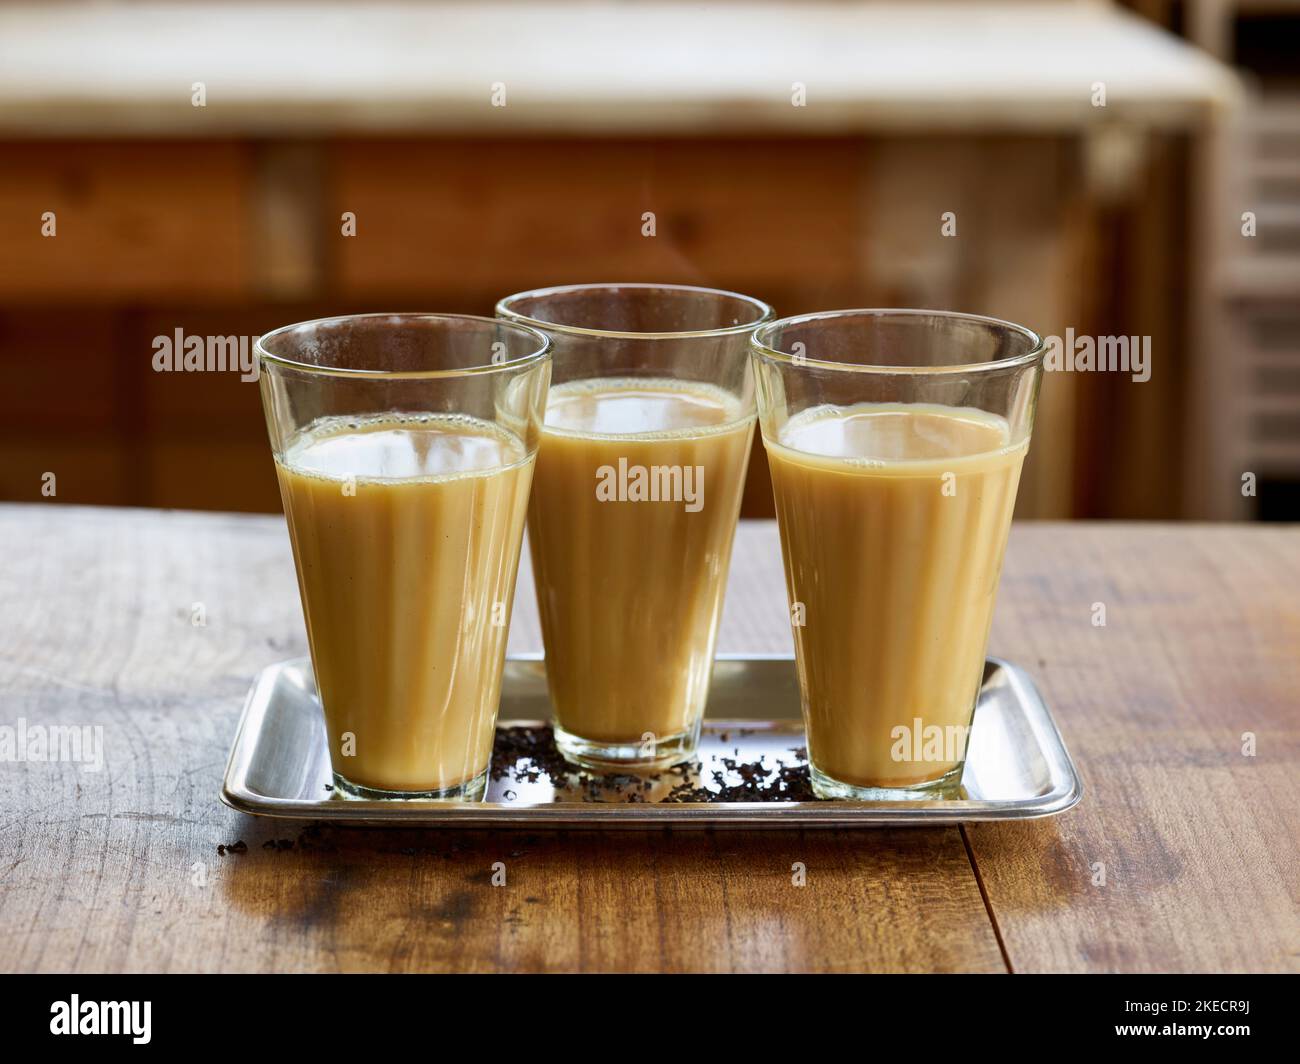 ayurvedic cuisine, three glasses of Golden Chai tea with milk or oat milk Stock Photo